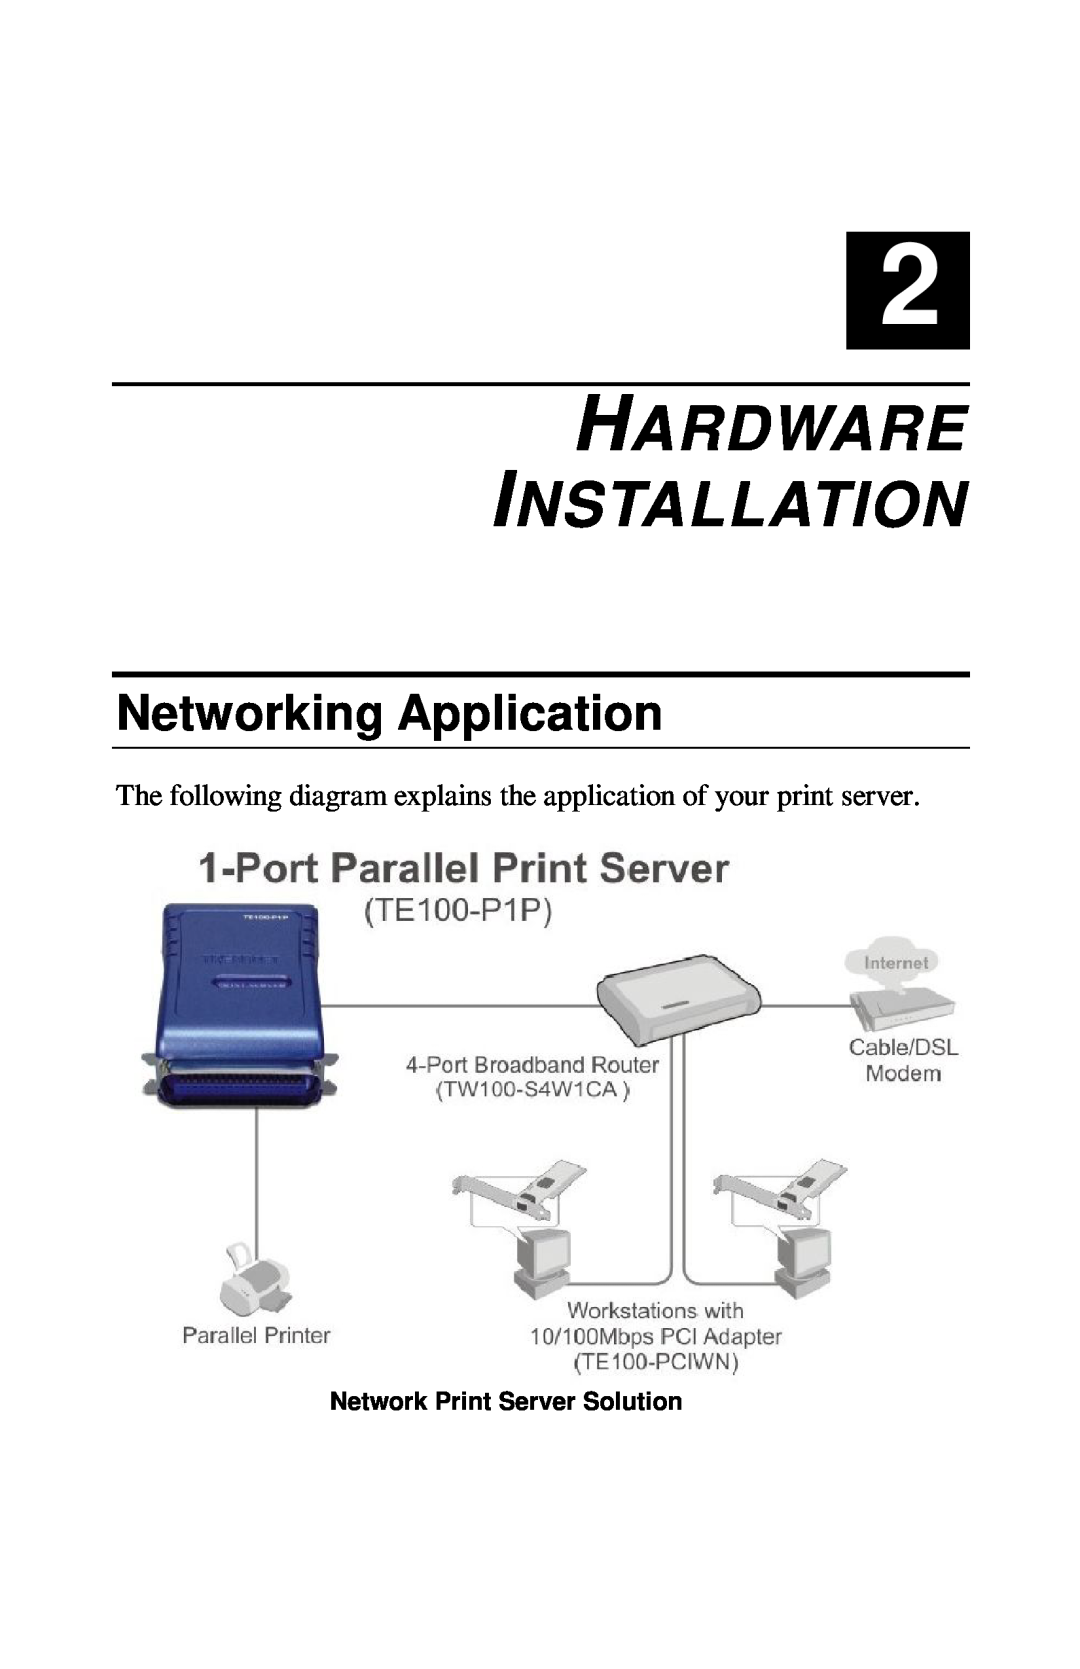 TRENDnet TE100-PIP manual Hardware Installation, Networking Application, Network Print Server Solution 